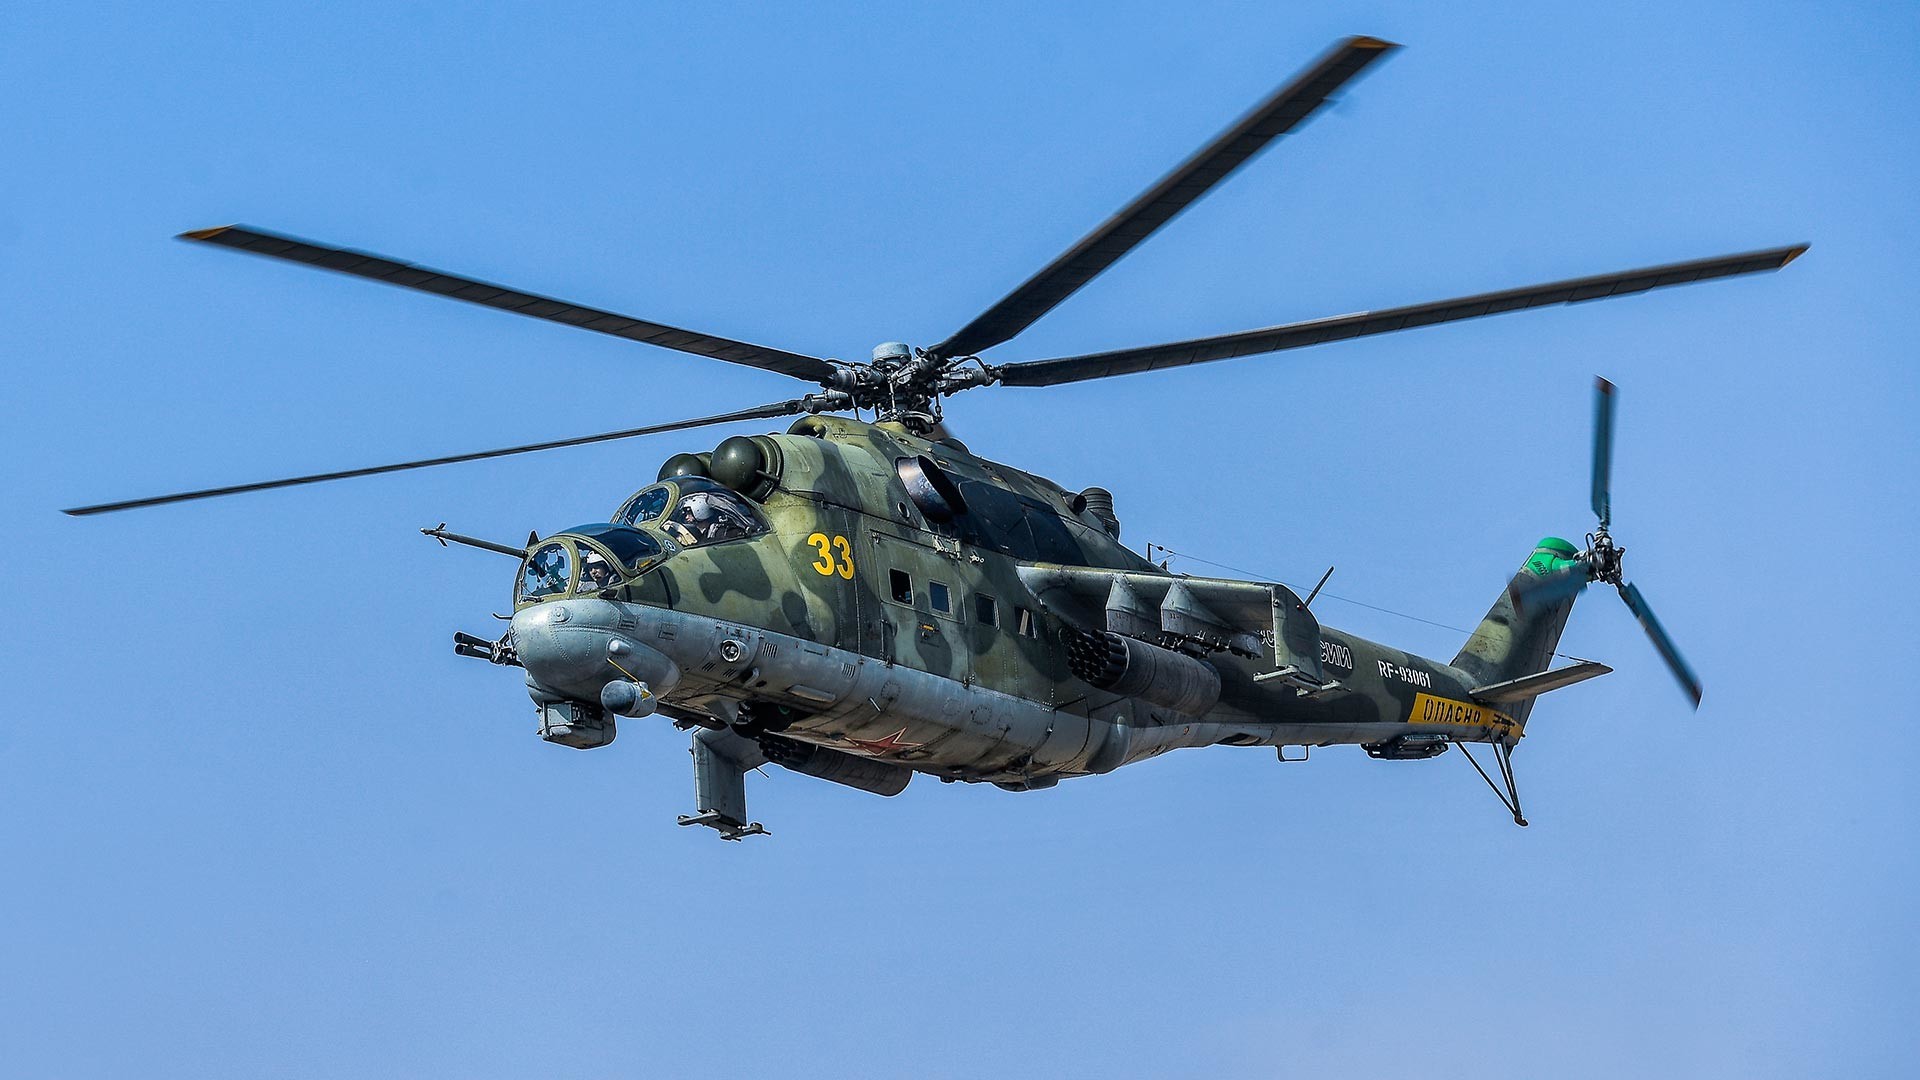 Јуришен хеликоптер Ми-24.

